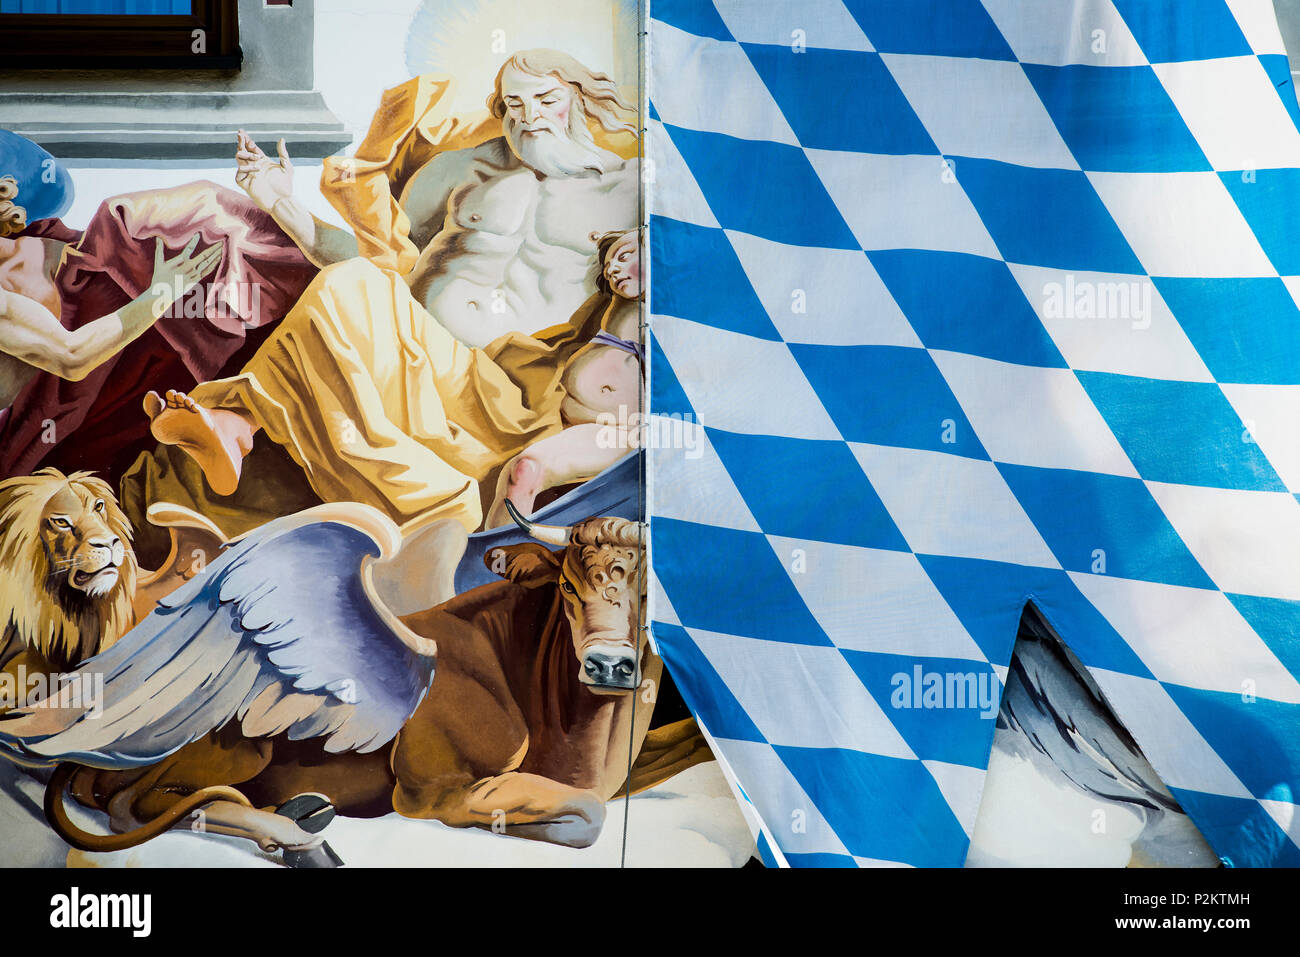 Pareti con murali dipinti e bandiera bavarese, Garmisch-Partenkirchen, Alta Baviera, Baviera, Germania Foto Stock